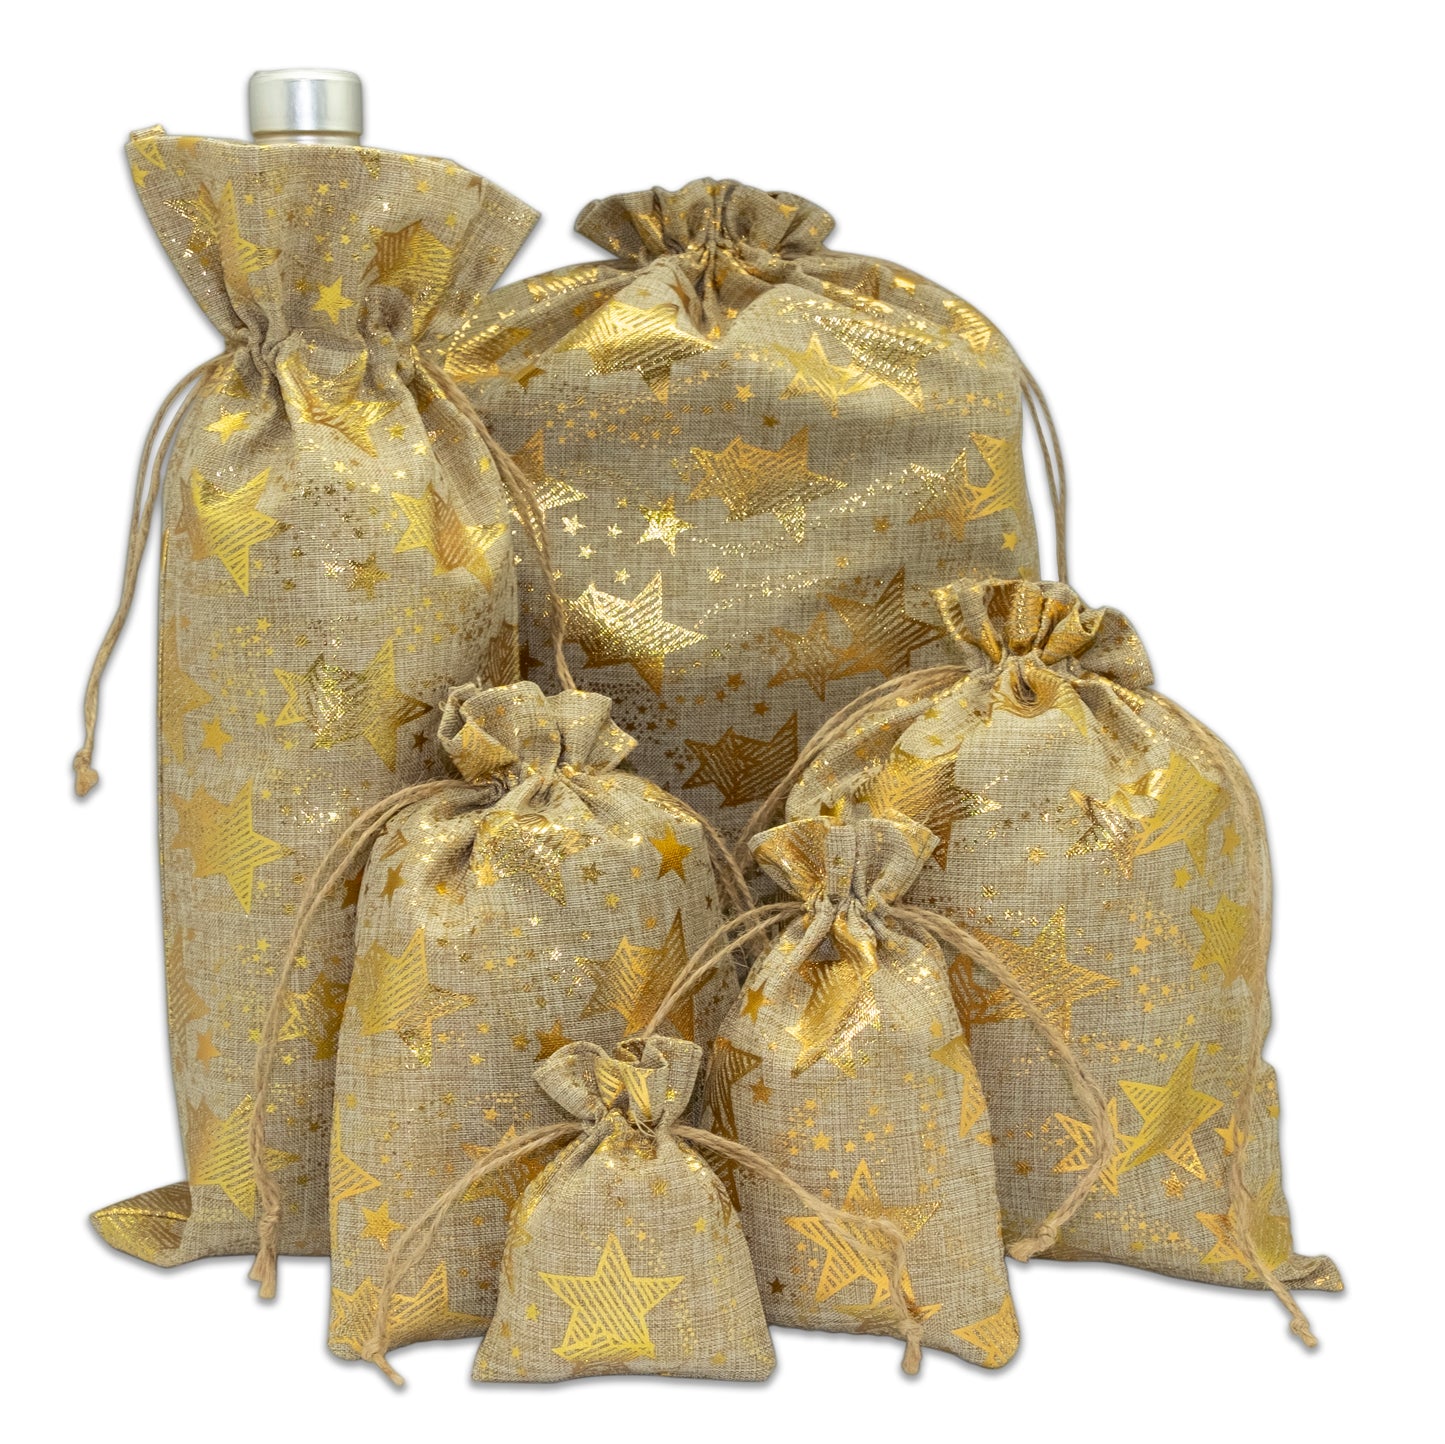 4" x 6" Jute Burlap Gold Star Drawstring Gift Bags